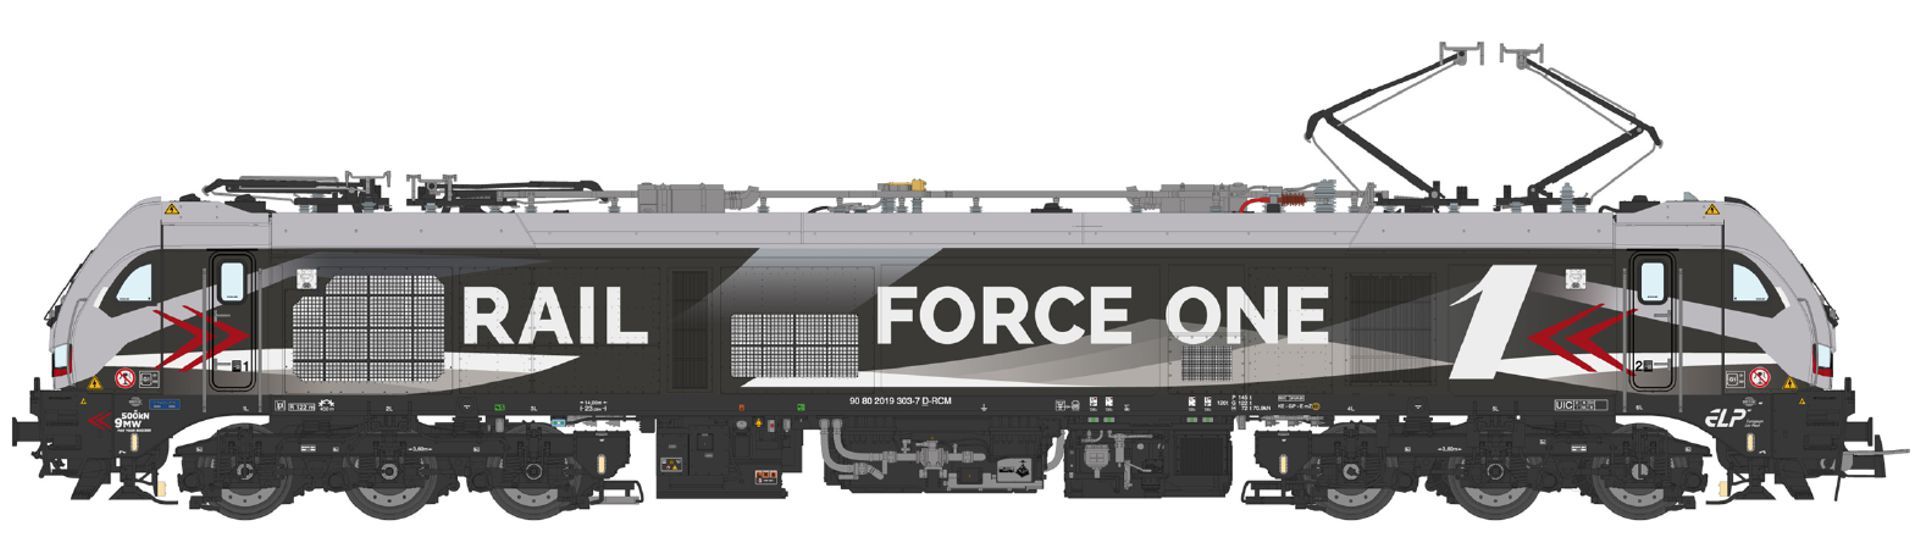 Sudexpress S0193031 - Stadler Dual-Mode Euro 9000 2019 303-7, Rail Force One, Ep.VI